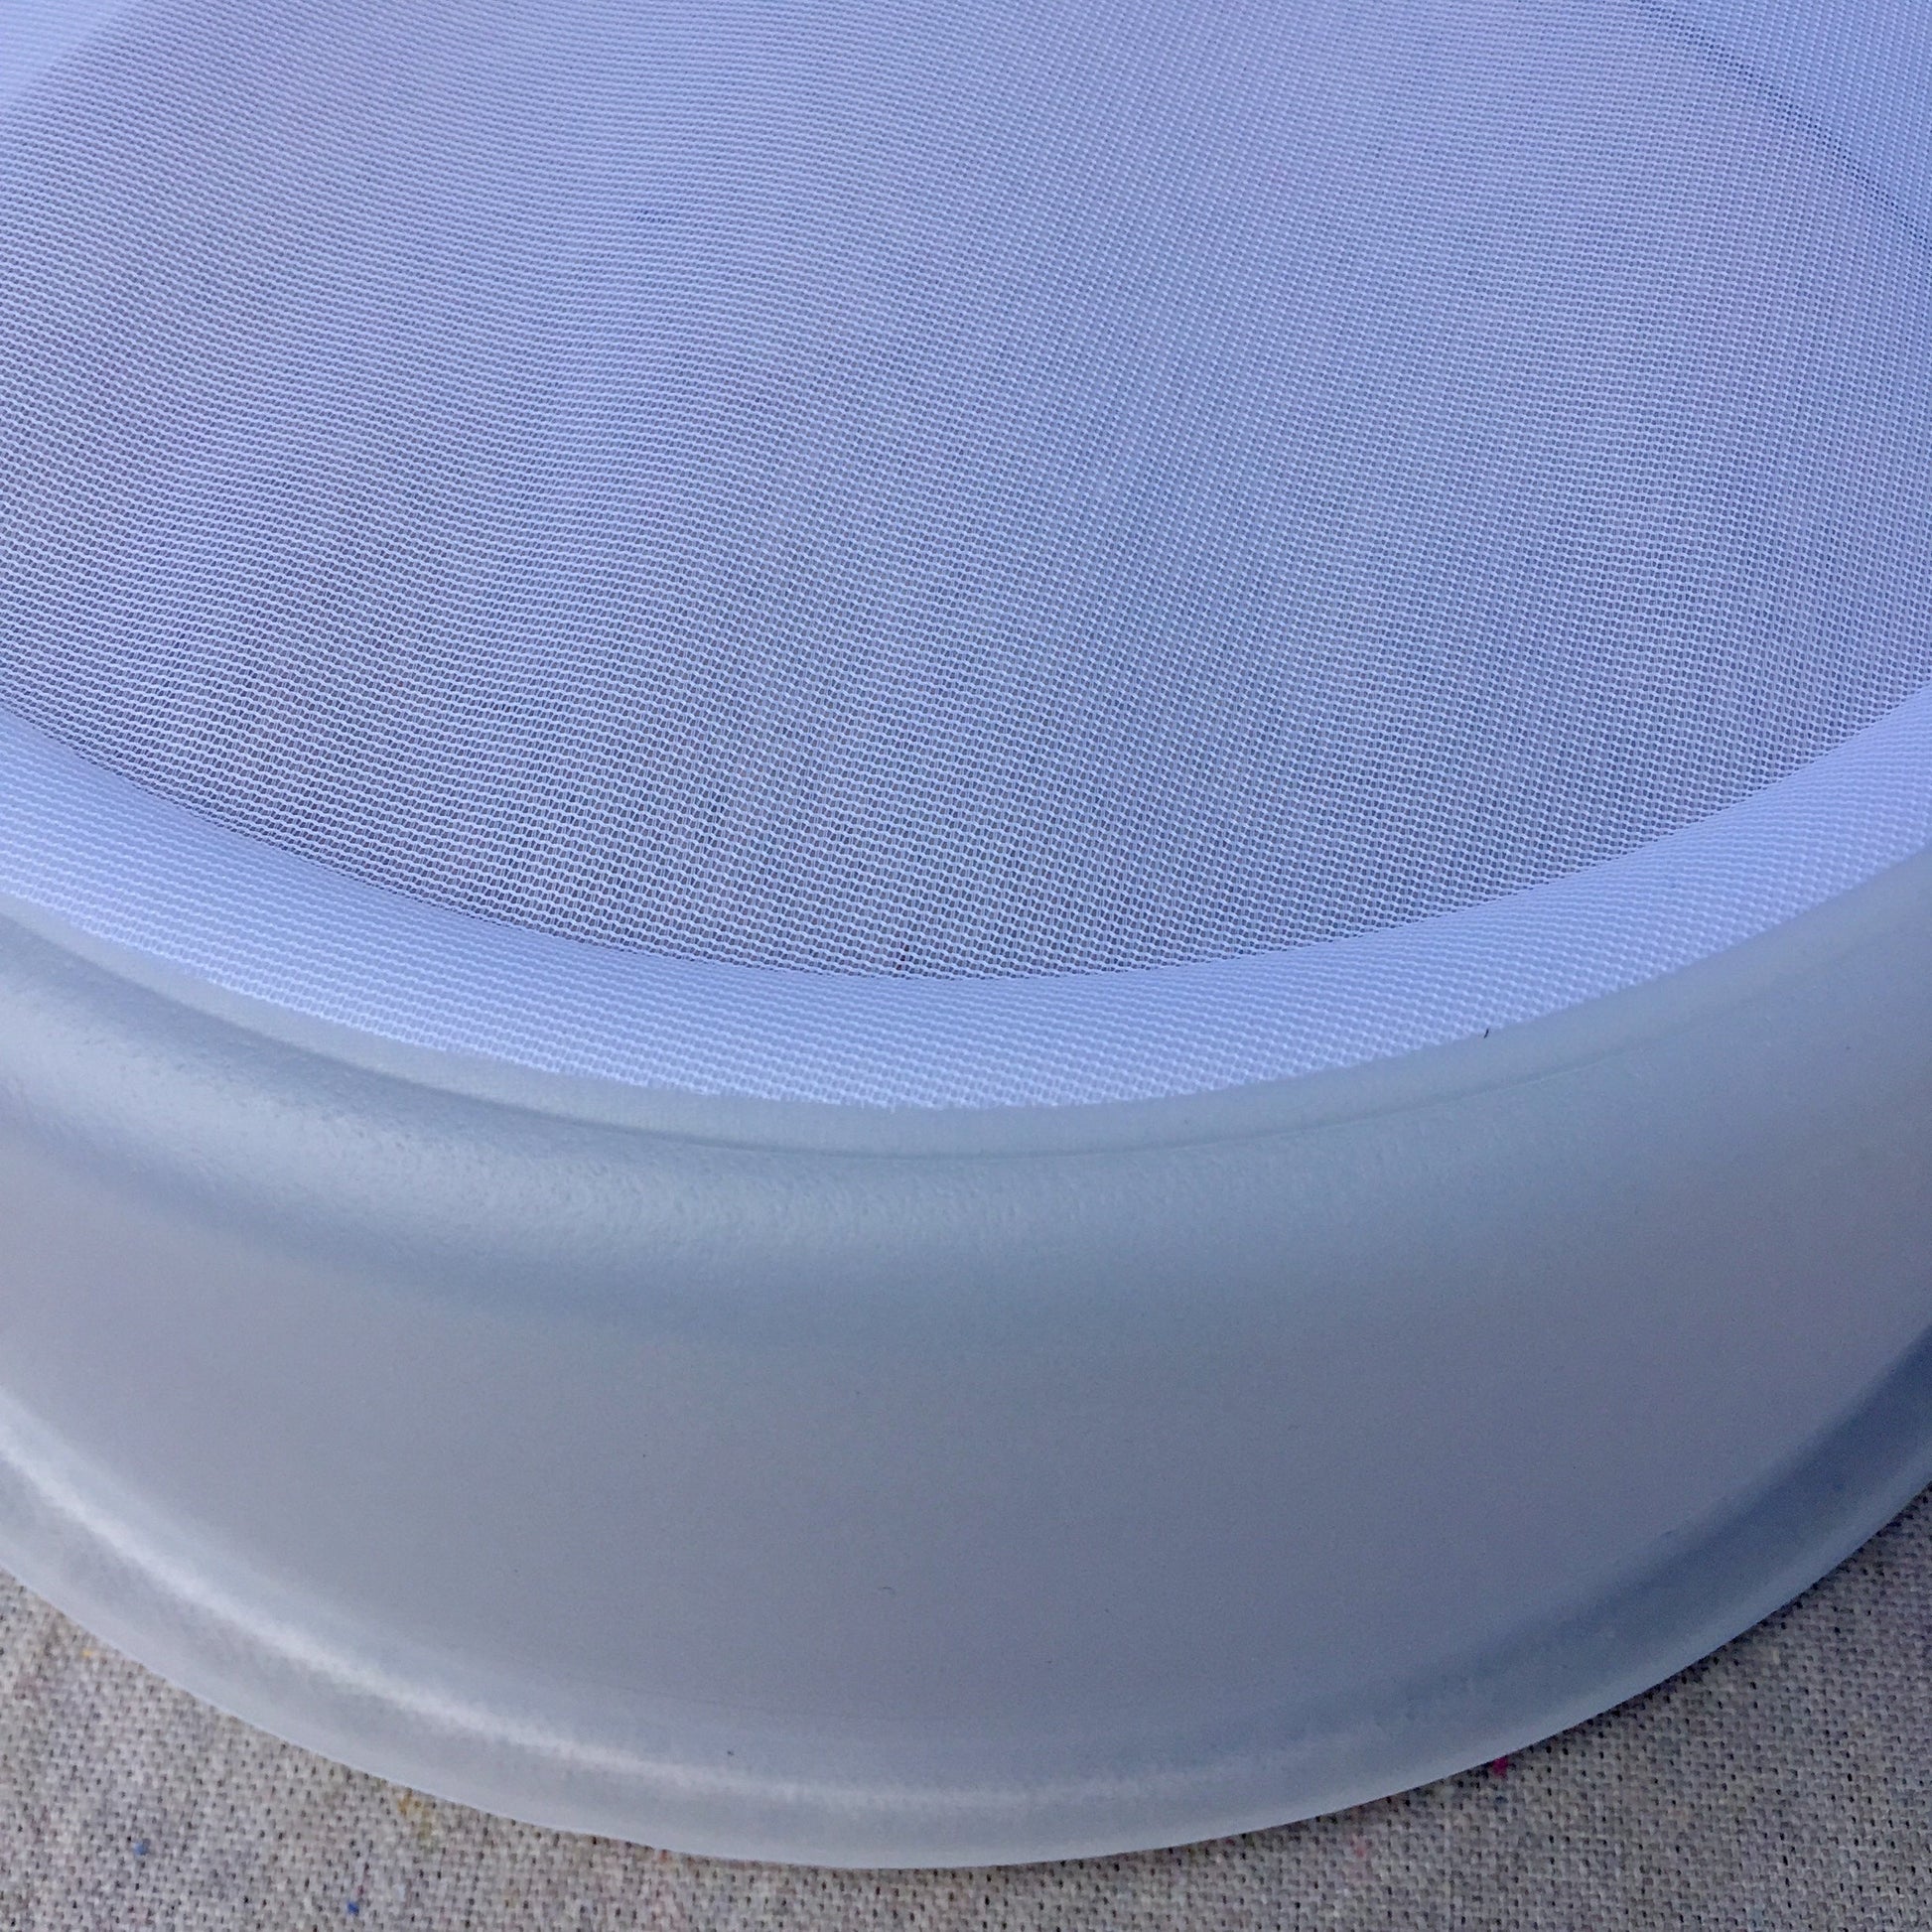 5 Gallon Bucket strainer Filter for Liquids - Honey Paint